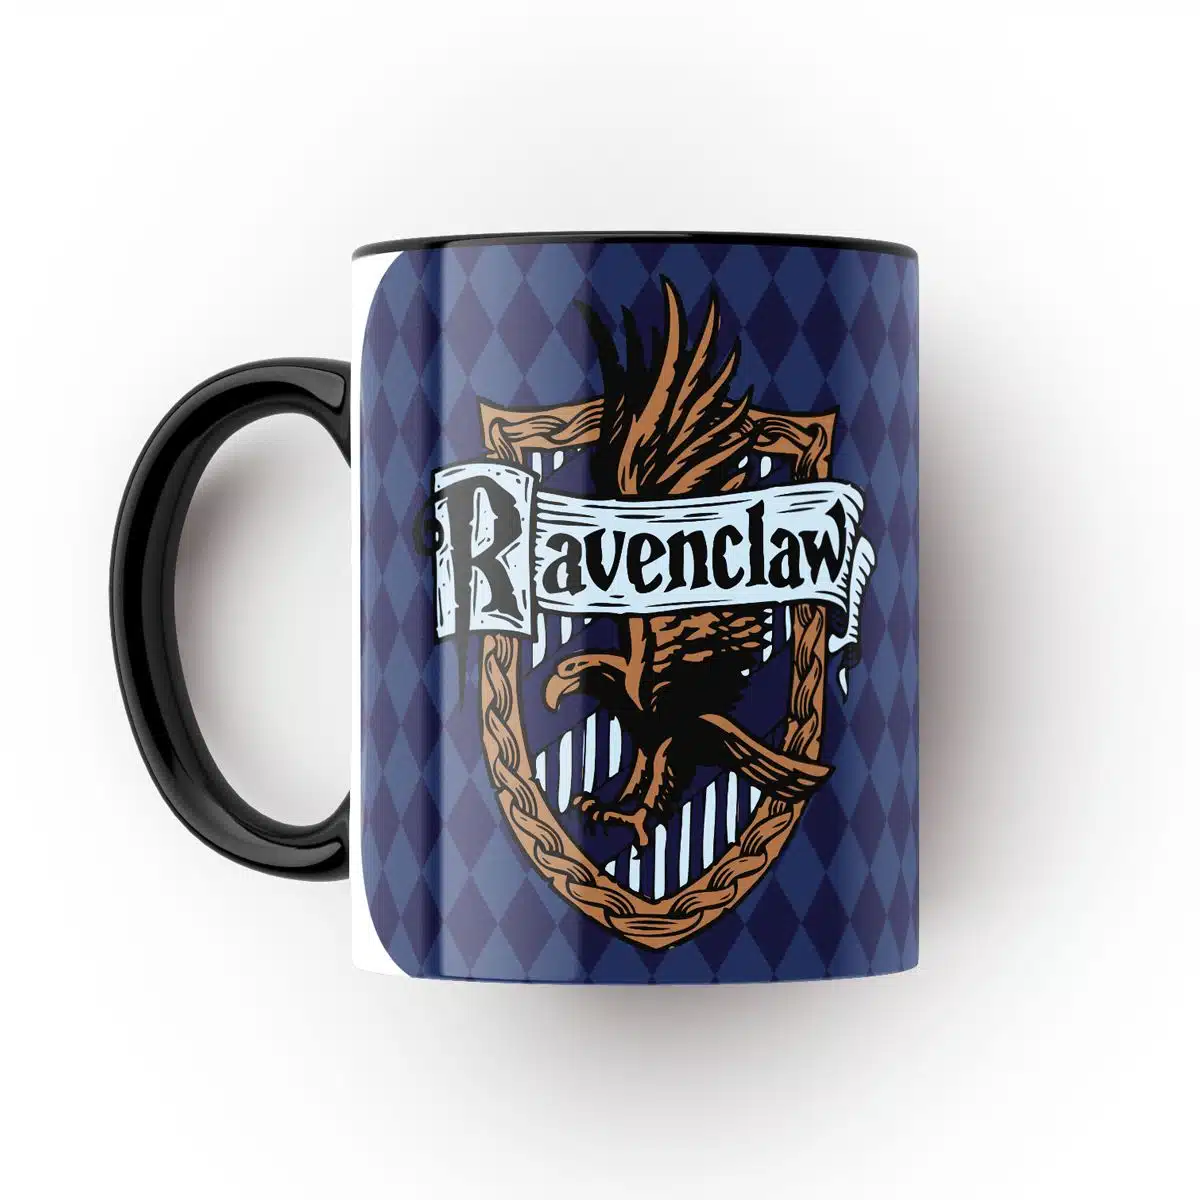 Caneca Harry Potter - Corvinal/Ravenclaw